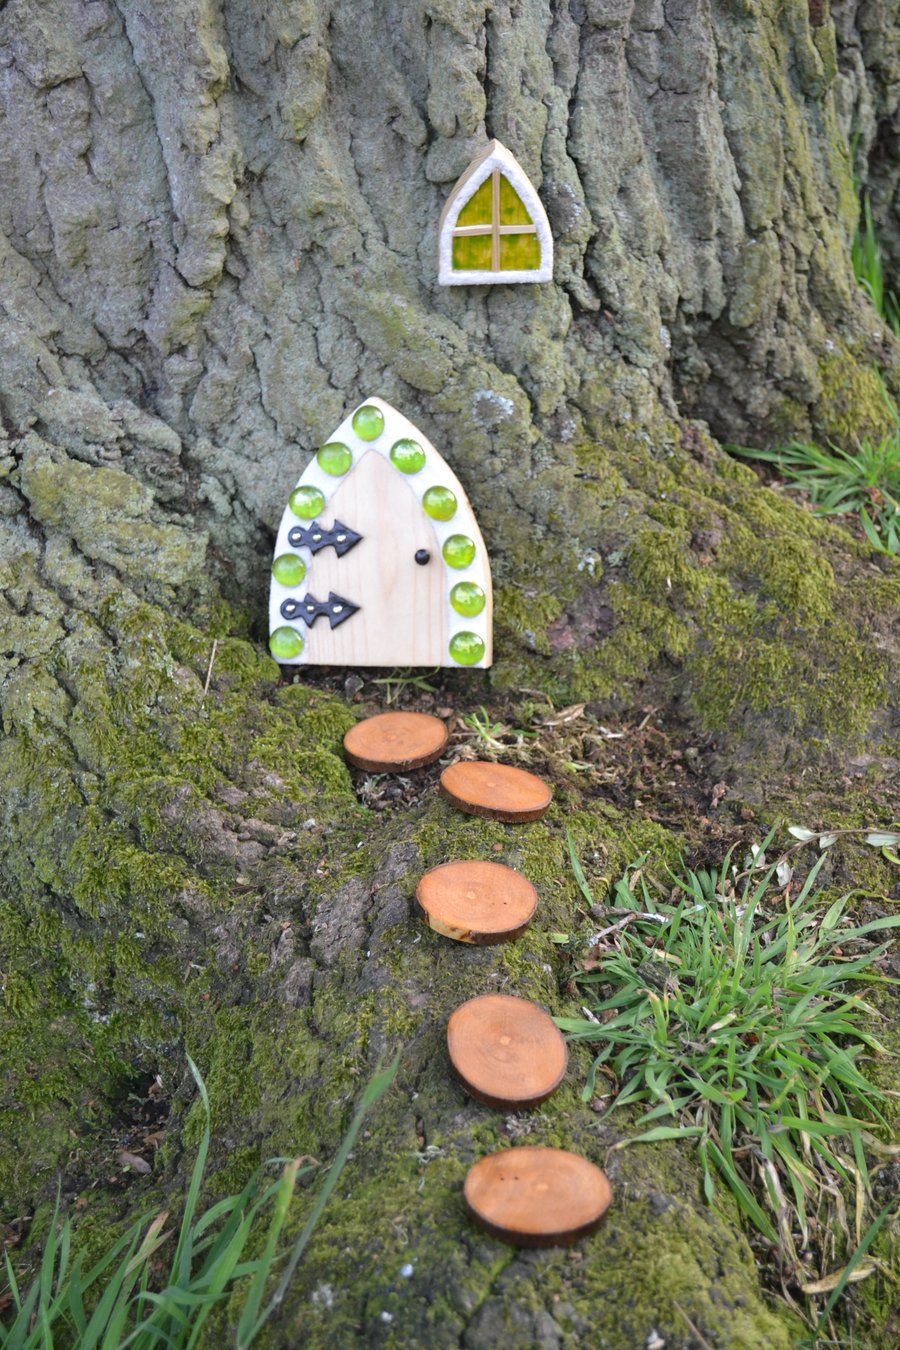 Garden Fairy, Gnome, Hobbit, Elf Forest door kit (Green pebbles, white trim)